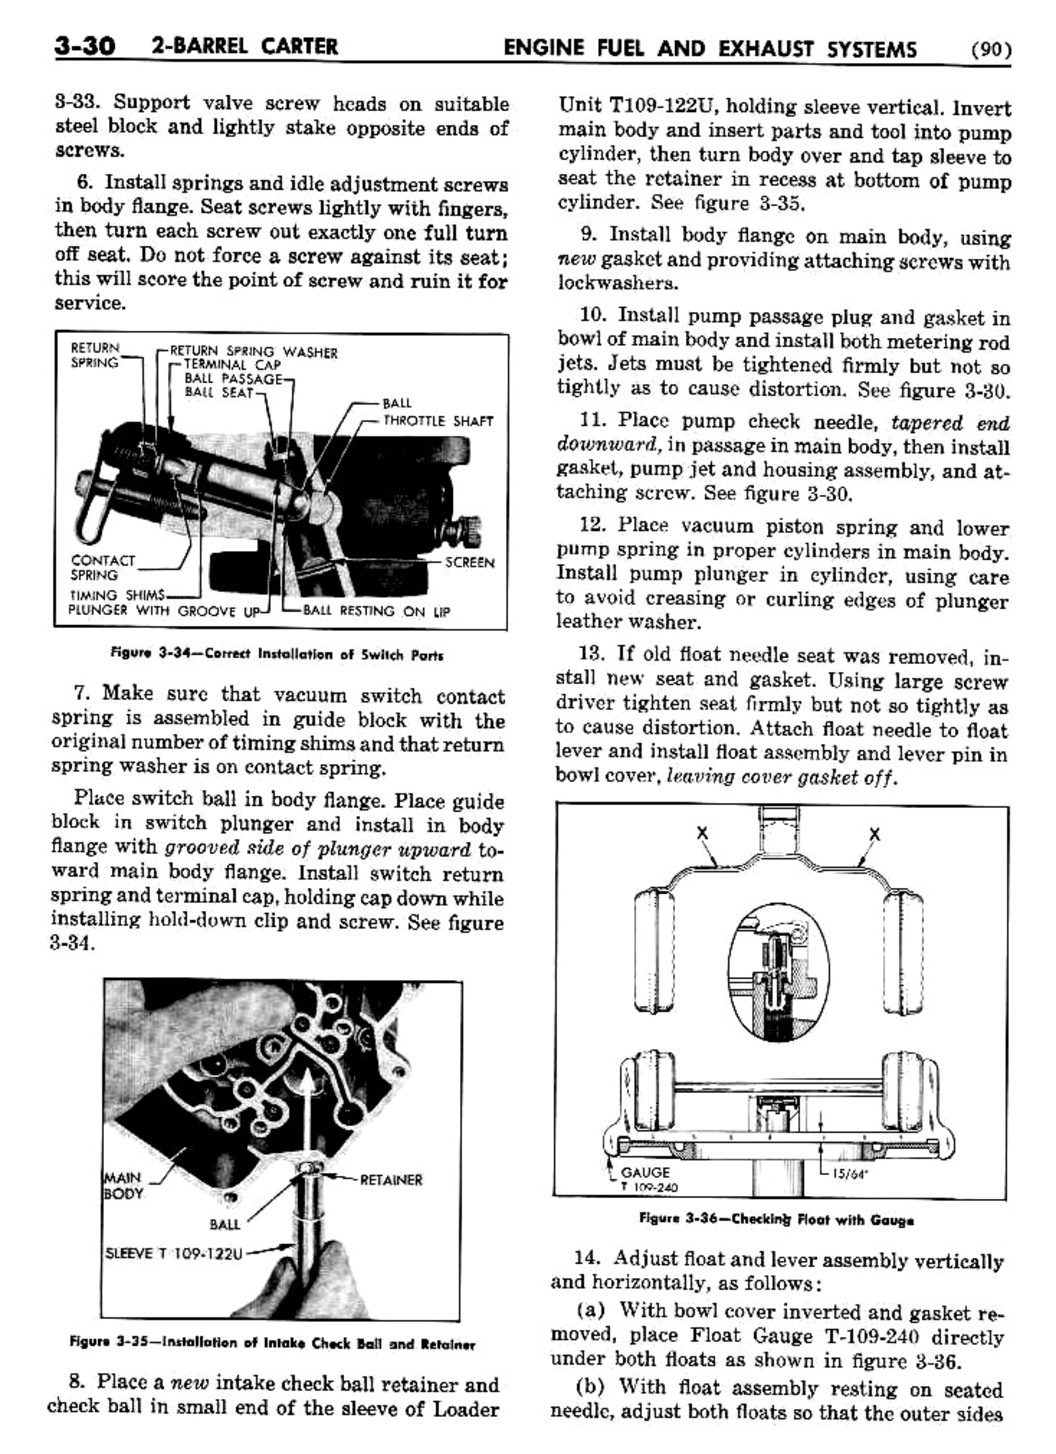 n_04 1954 Buick Shop Manual - Engine Fuel & Exhaust-030-030.jpg